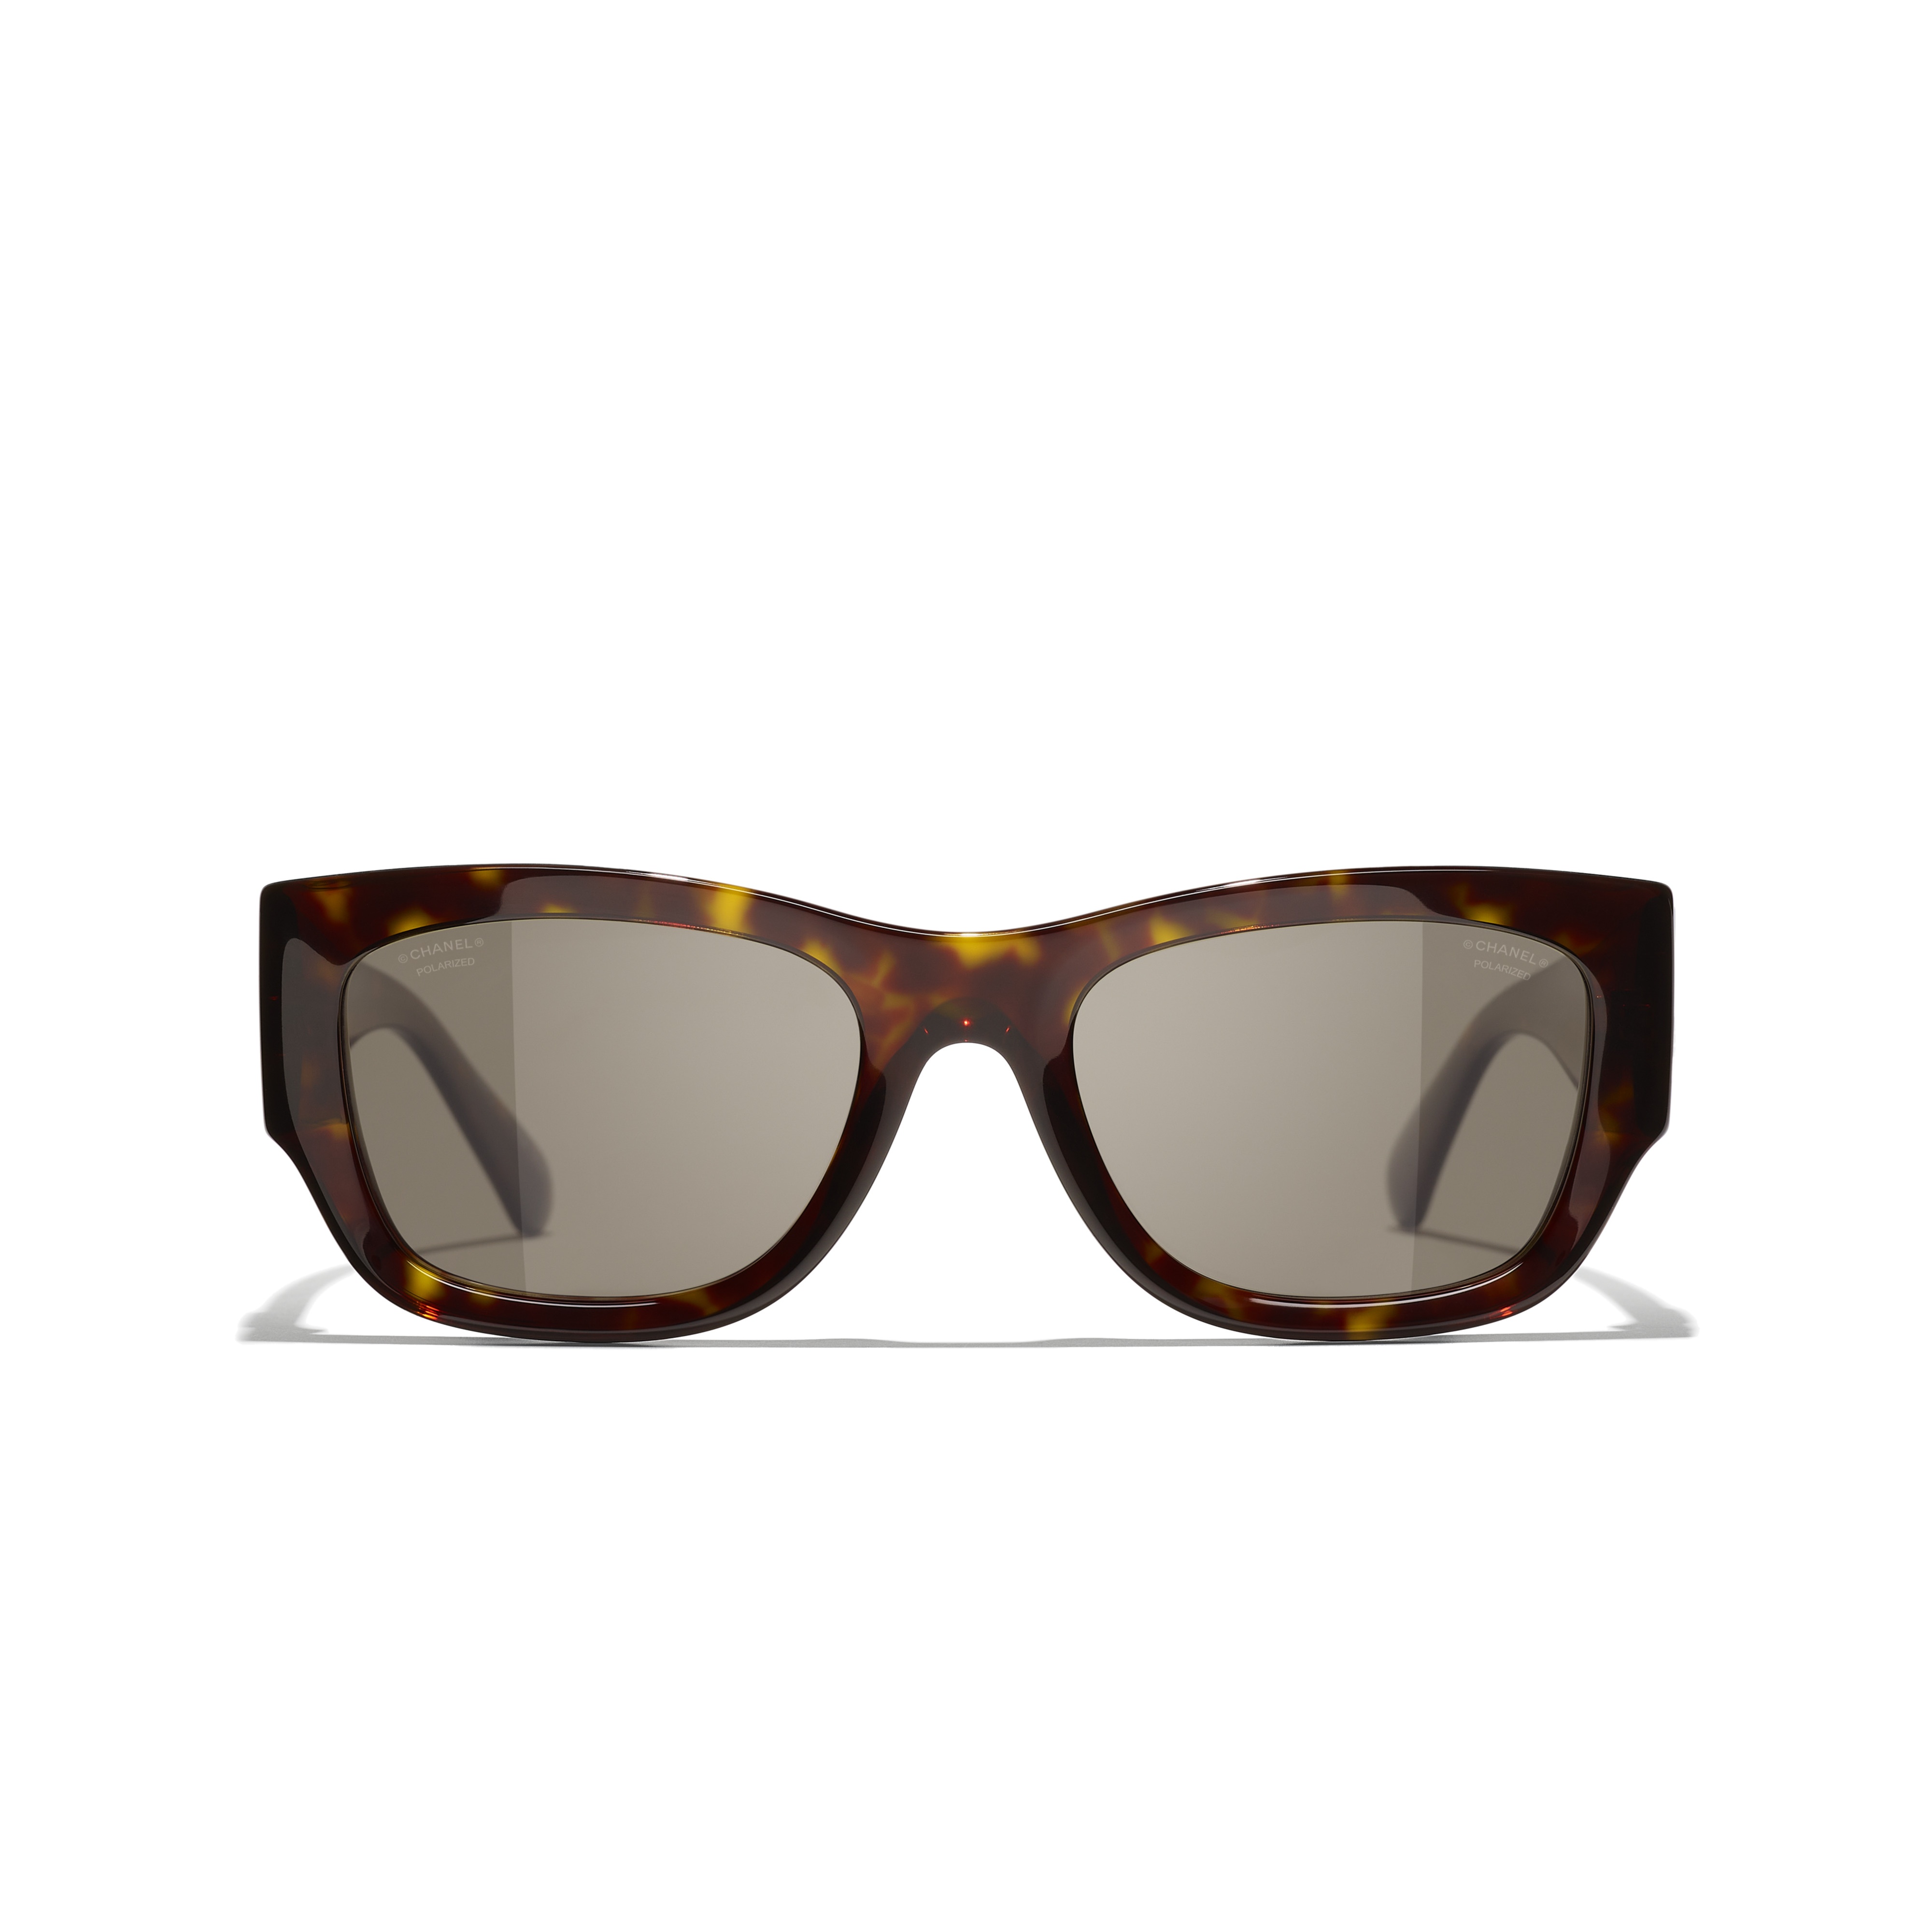 Sunglasses Ray-Ban Meta Smart Glasses Wayfarer Large RW 4008 (601/71)  RW4008 Unisex | Free Shipping Shop Online